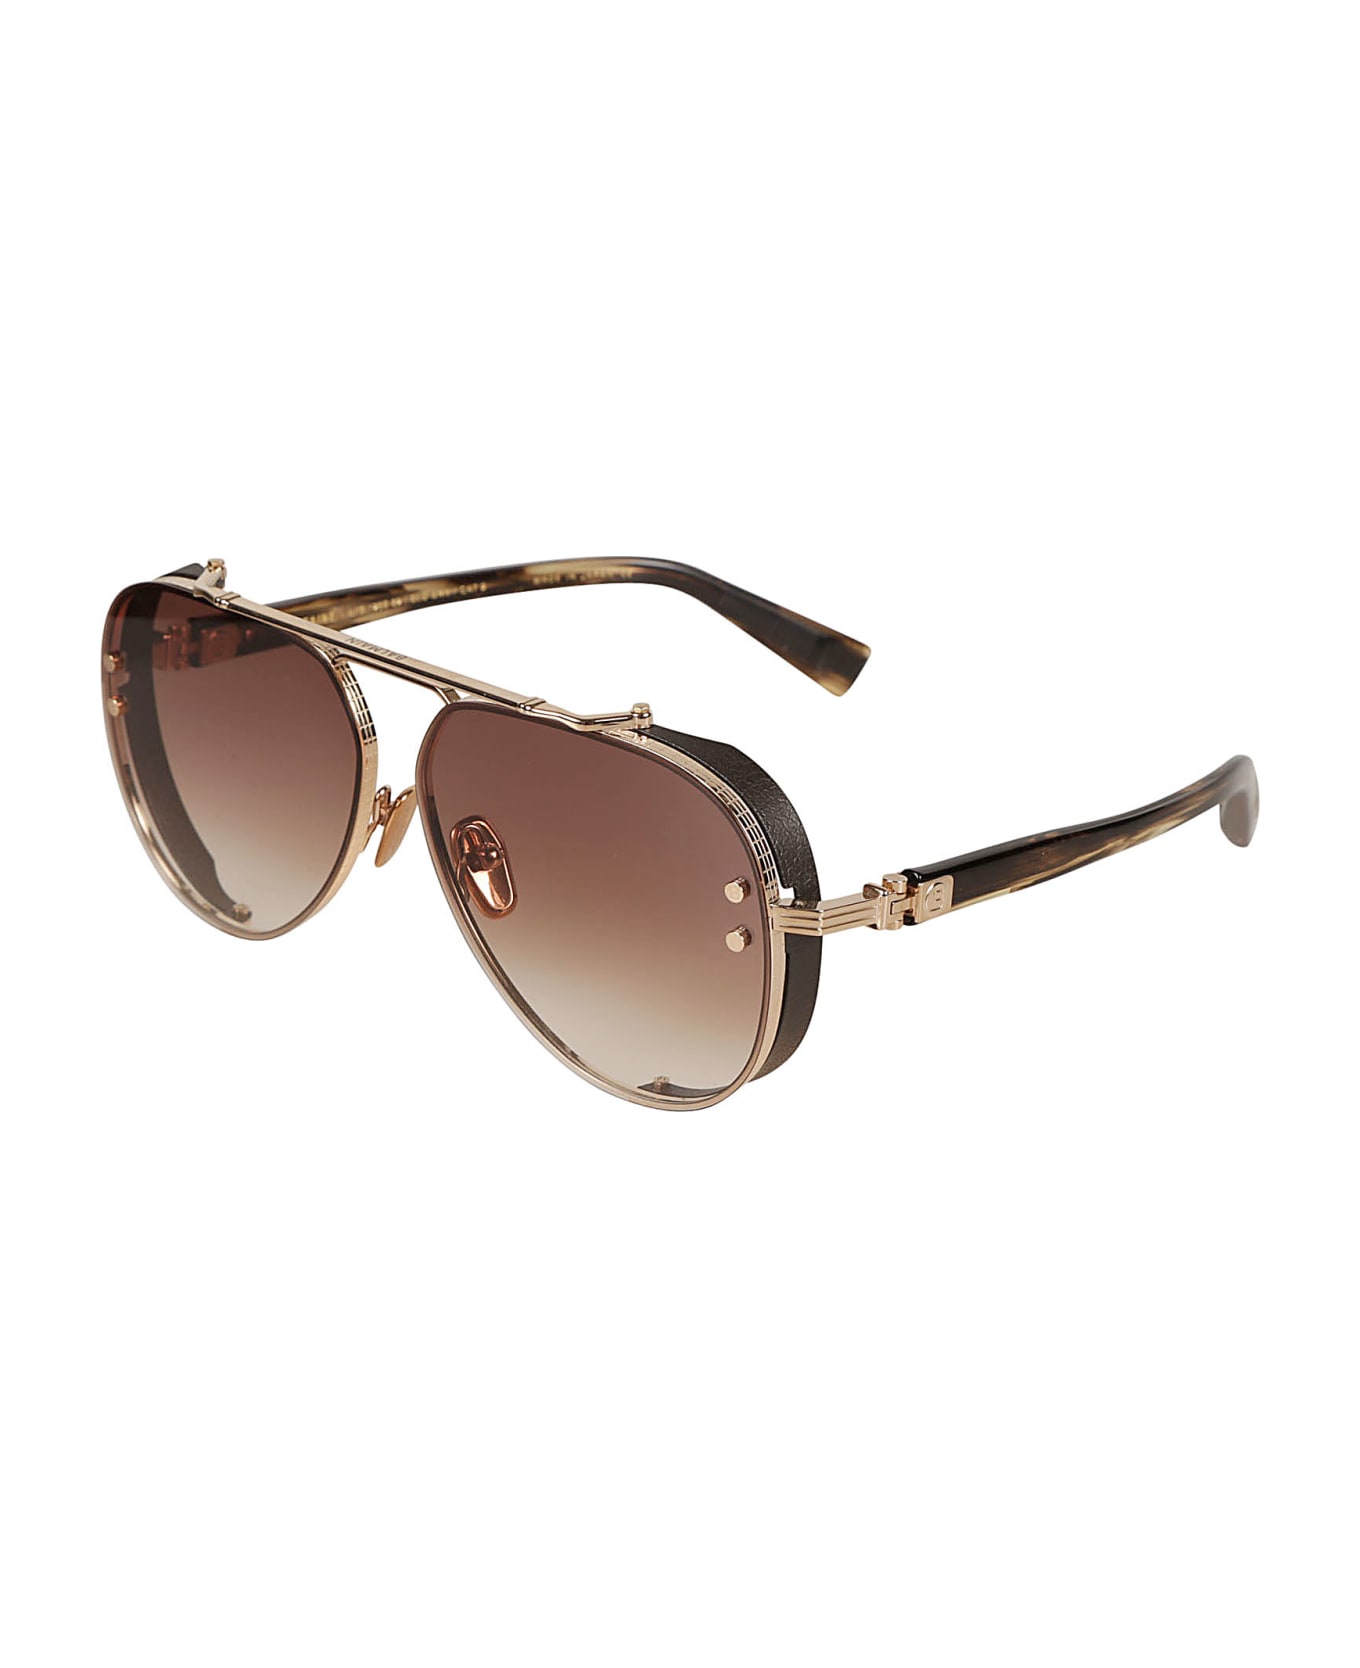 Balmain Captaine Sunglasses Sunglasses - Gold/Brown